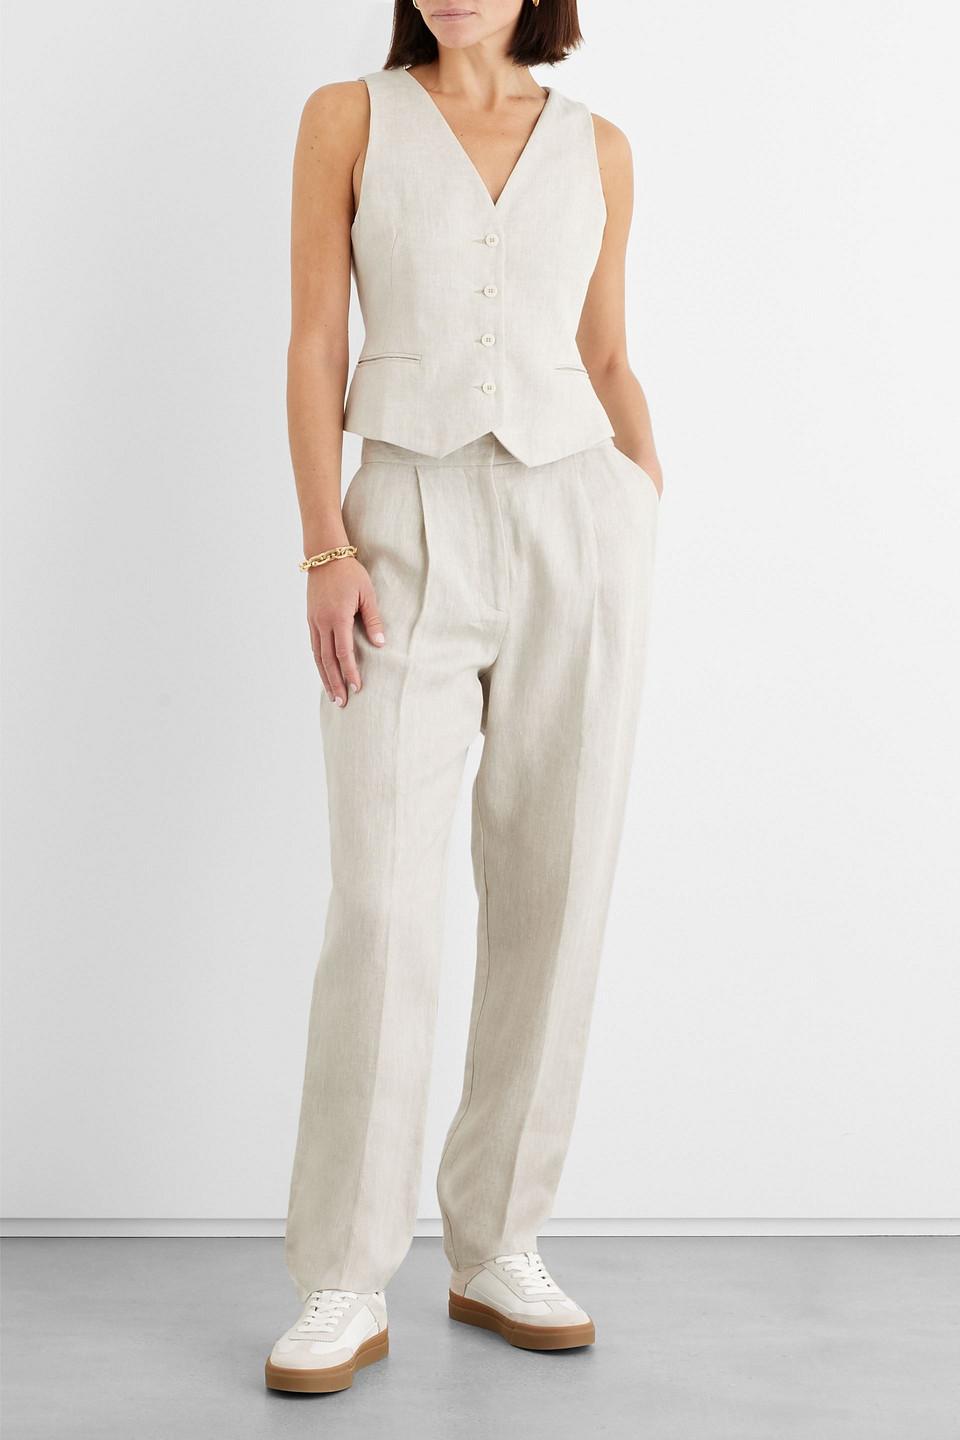 Iris & Ink Lilah Herringbone Linen Tapered Pants in White | Lyst